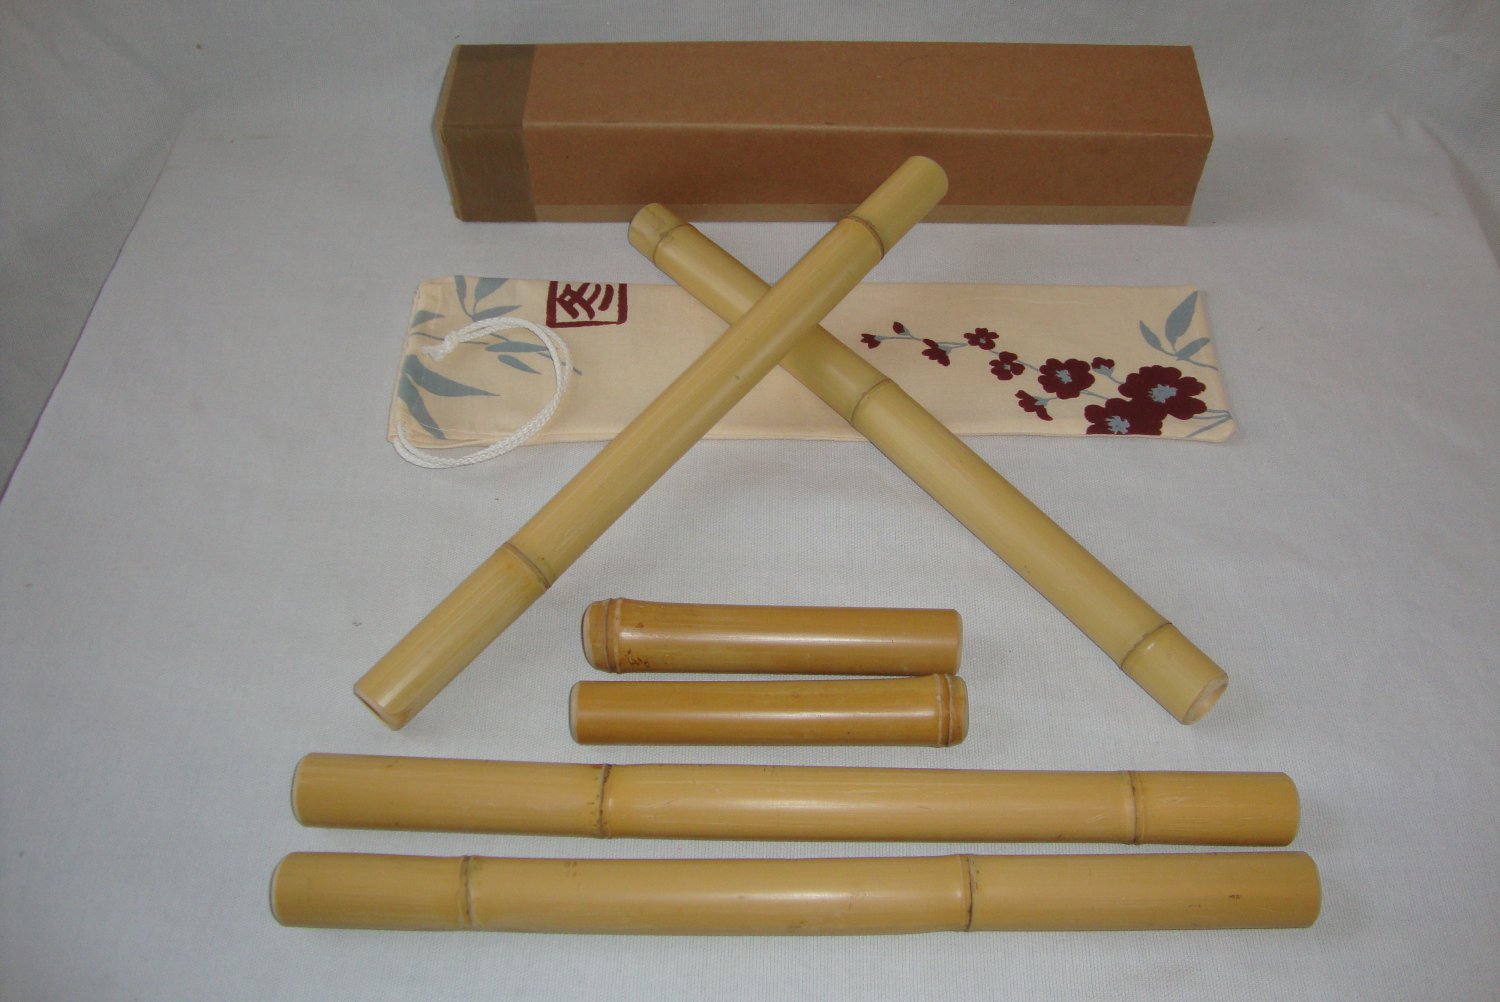 Массажный бамбуковый. Массаж бамбуковыми палочками. Бамбуковые палки для массажа. Бамбуковая скалка для массажа. Креольский массаж бамбуковыми палочками.